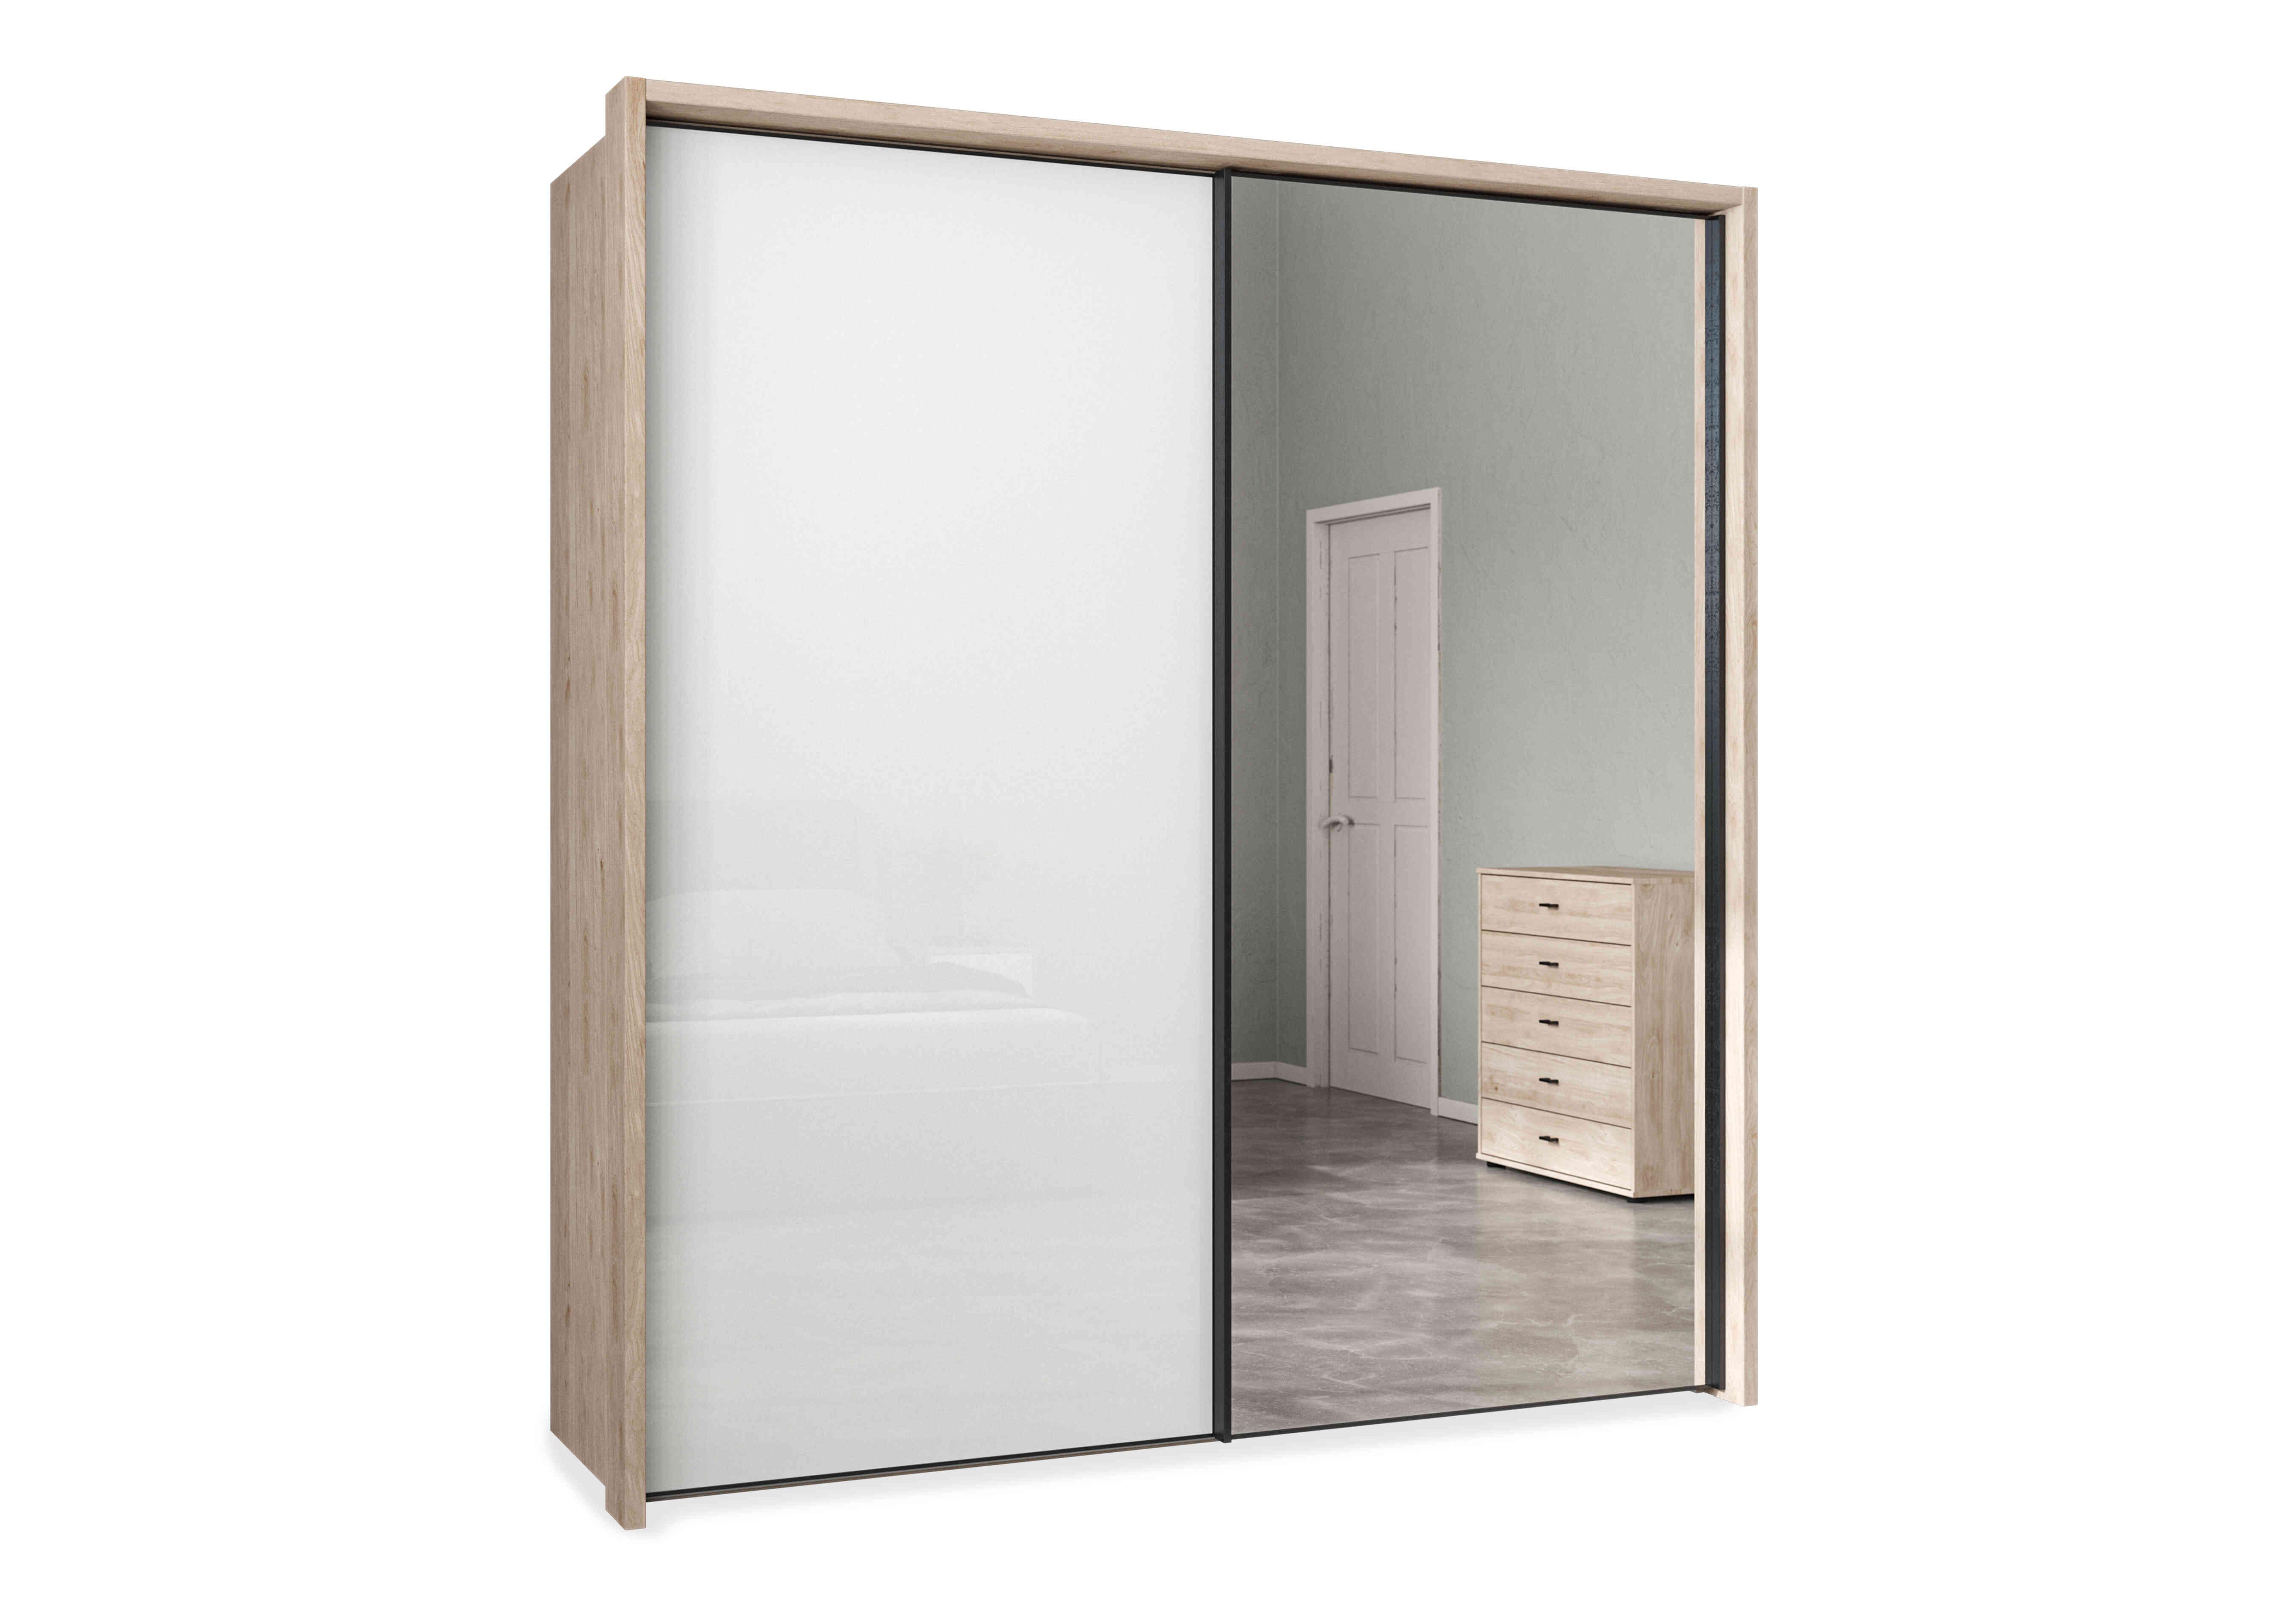 Dallas 210cm 2 Door Sliding Glass Wardrobe with Mirror Door in Holm Oak And White on Furniture Village